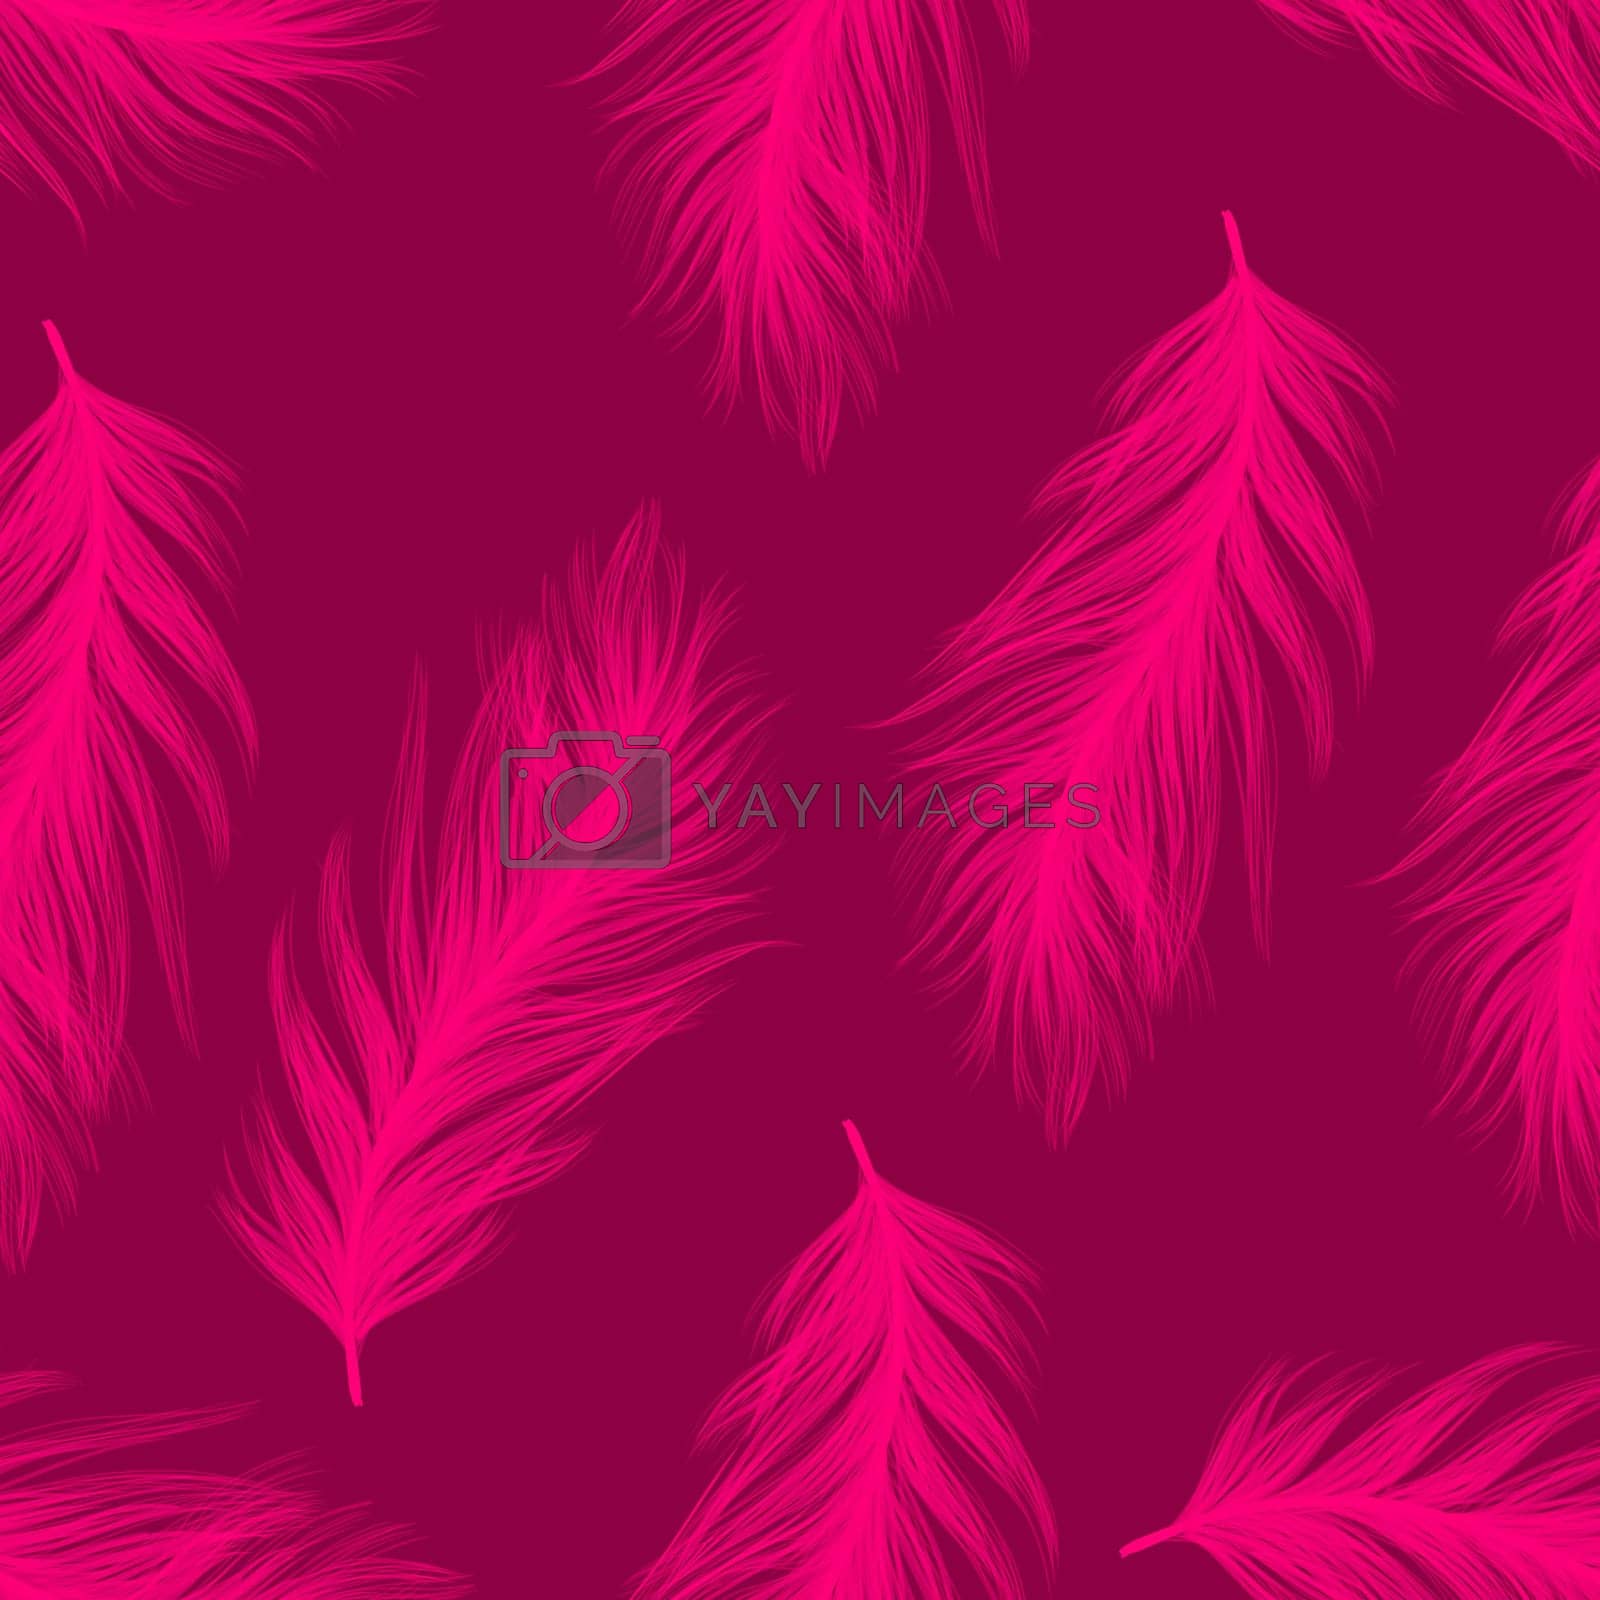 Royalty free image of feathers seamless pattern. A chic pattern of feathers on a magenta background. by annatarankova